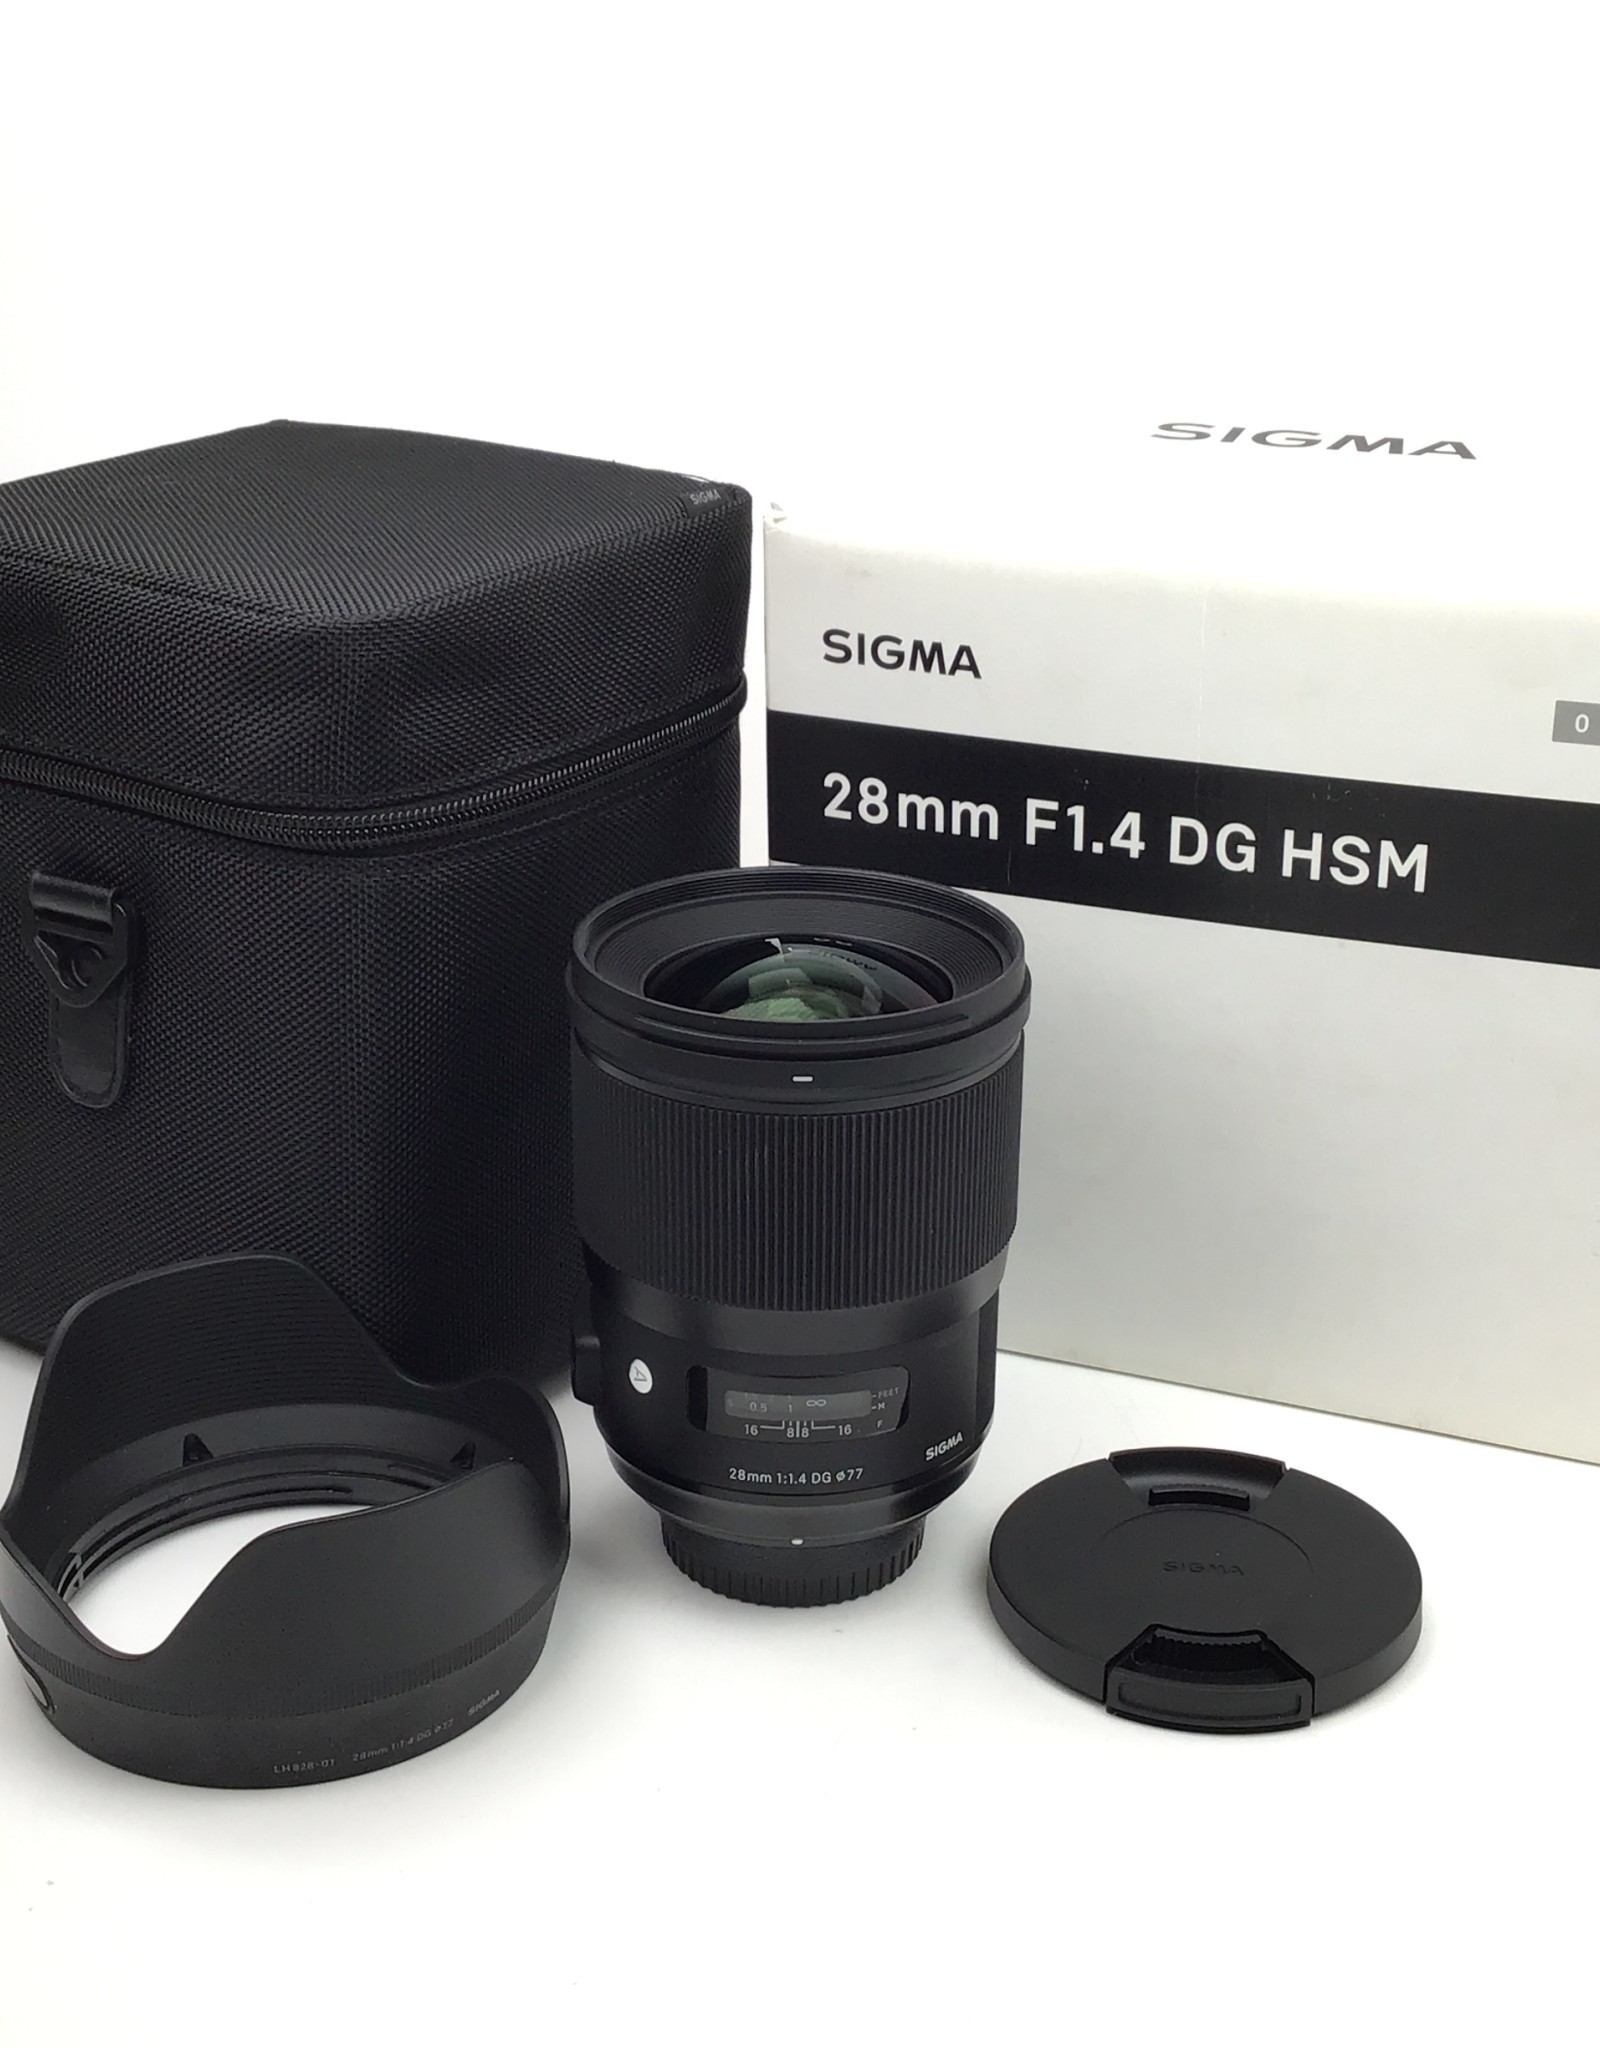 SIGMA Sigma 28mm f1.4 DG Art Lens in Box for Nikon Used EX